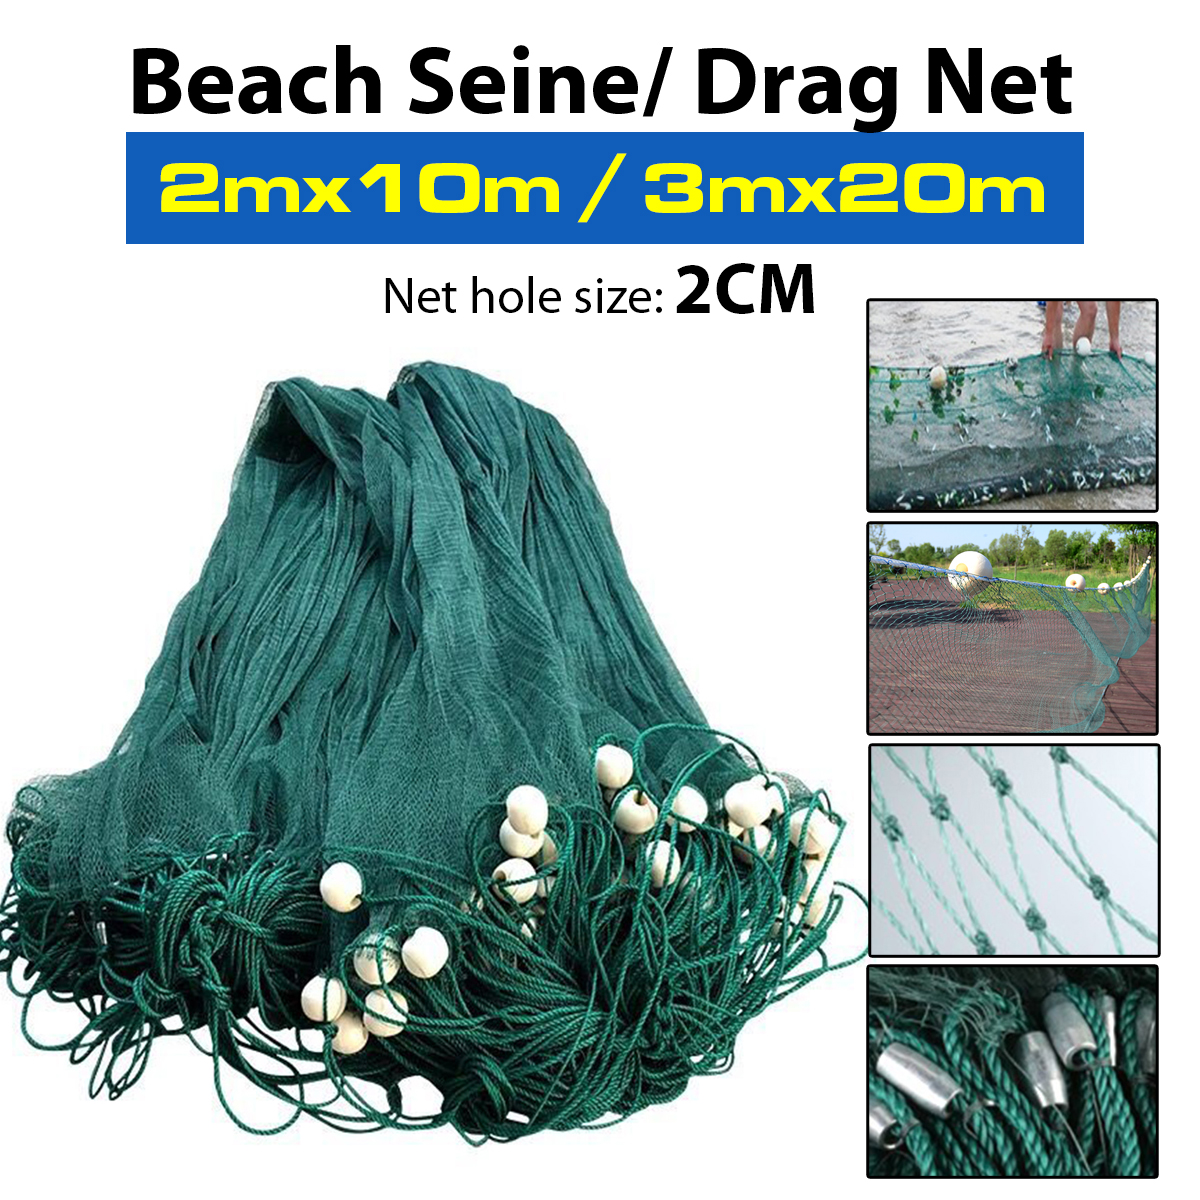 2x10M3x20M-Fishing-Drag-Net-Handmade-Beach-Seine-Monofilament-Fish-Cast-Mesh-Sinker-Gill-Trap-1367519-2